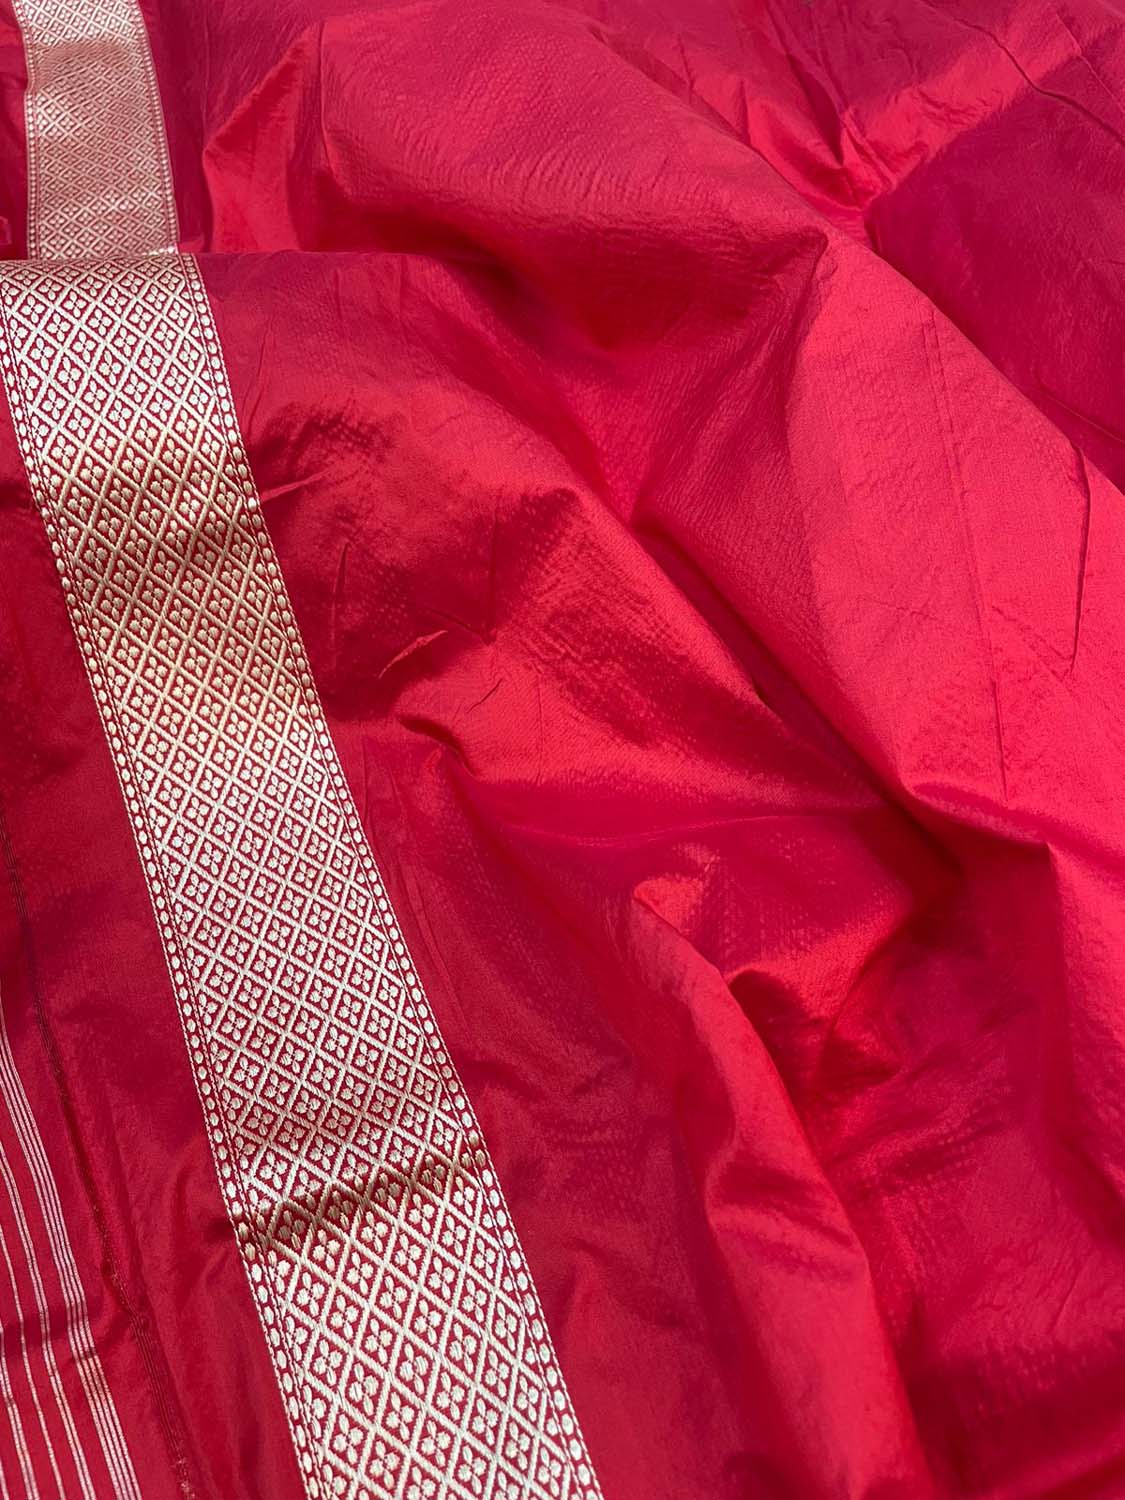 Exquisite Multicolor Banarasi Handloom Rangkat Pure Katan Silk Saree - Luxurion World